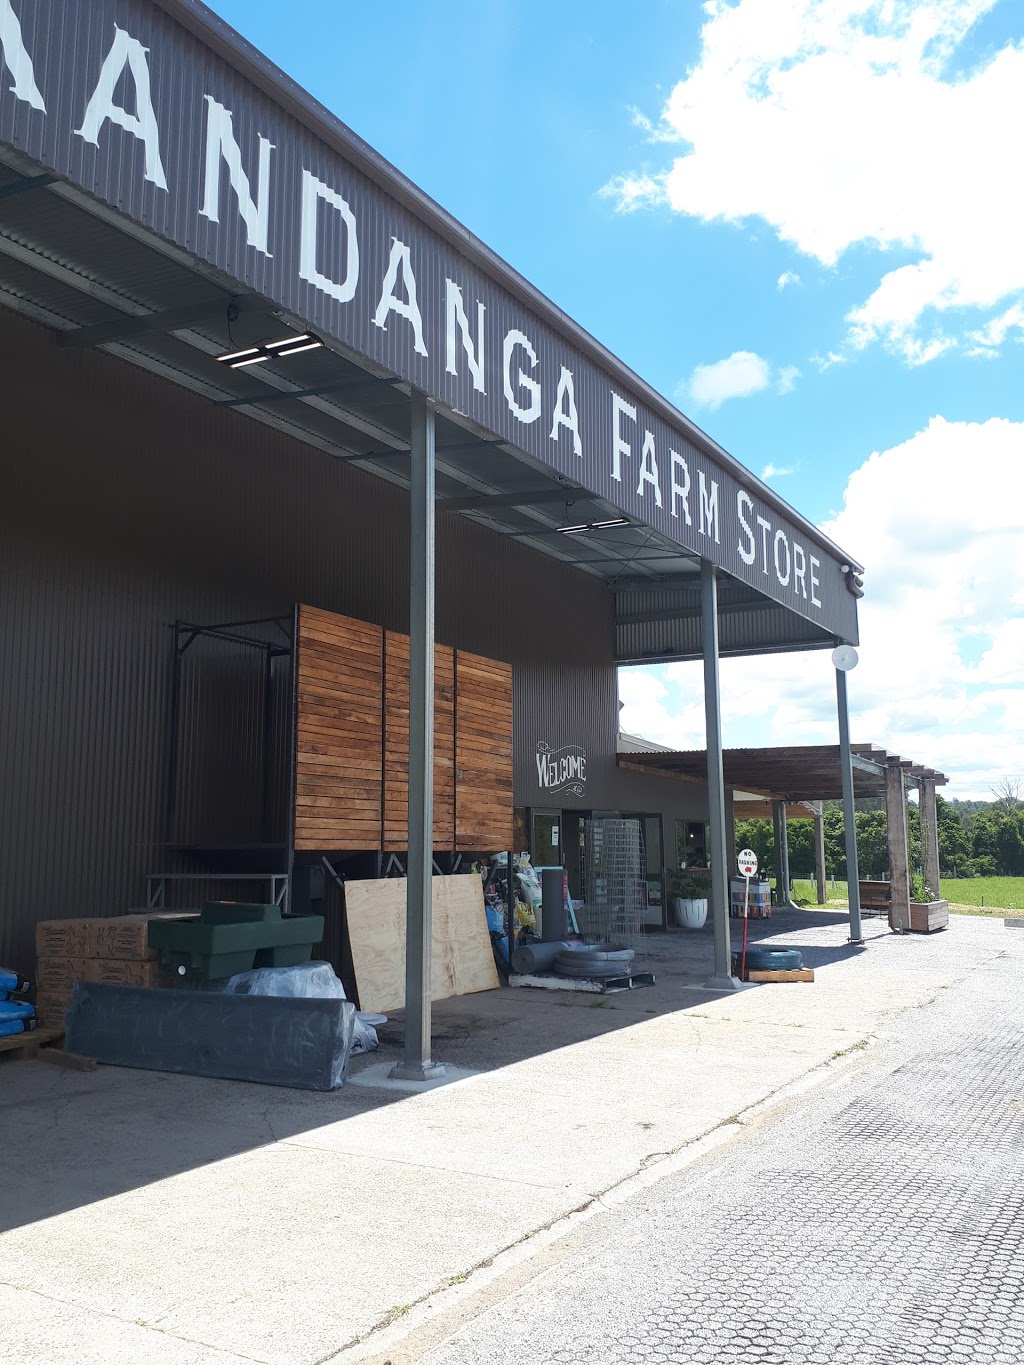 Kandanga Farm Store | store | 93 Main St, Kandanga QLD 4570, Australia | 0754843771 OR +61 7 5484 3771